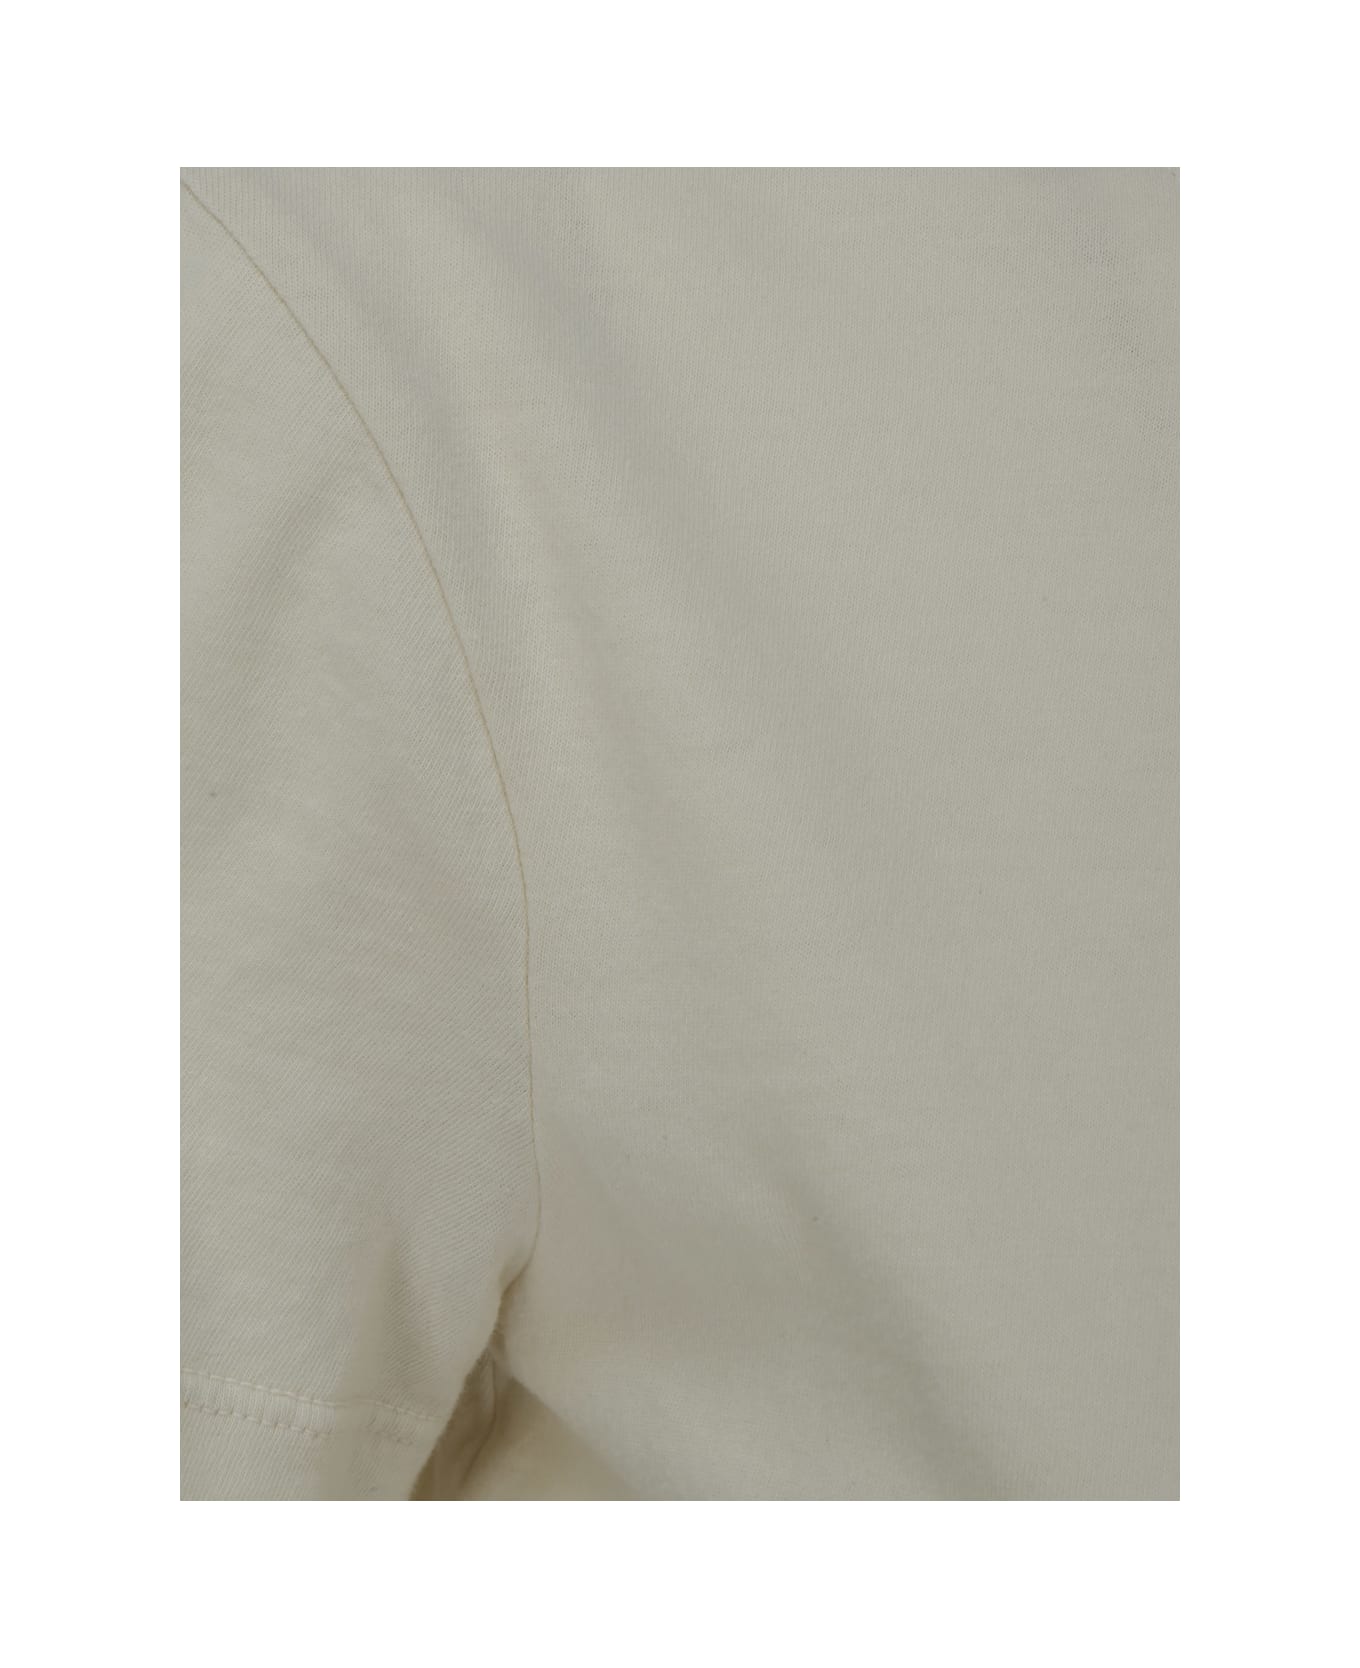 James Perse Vintage T-shirt - Marshmallow